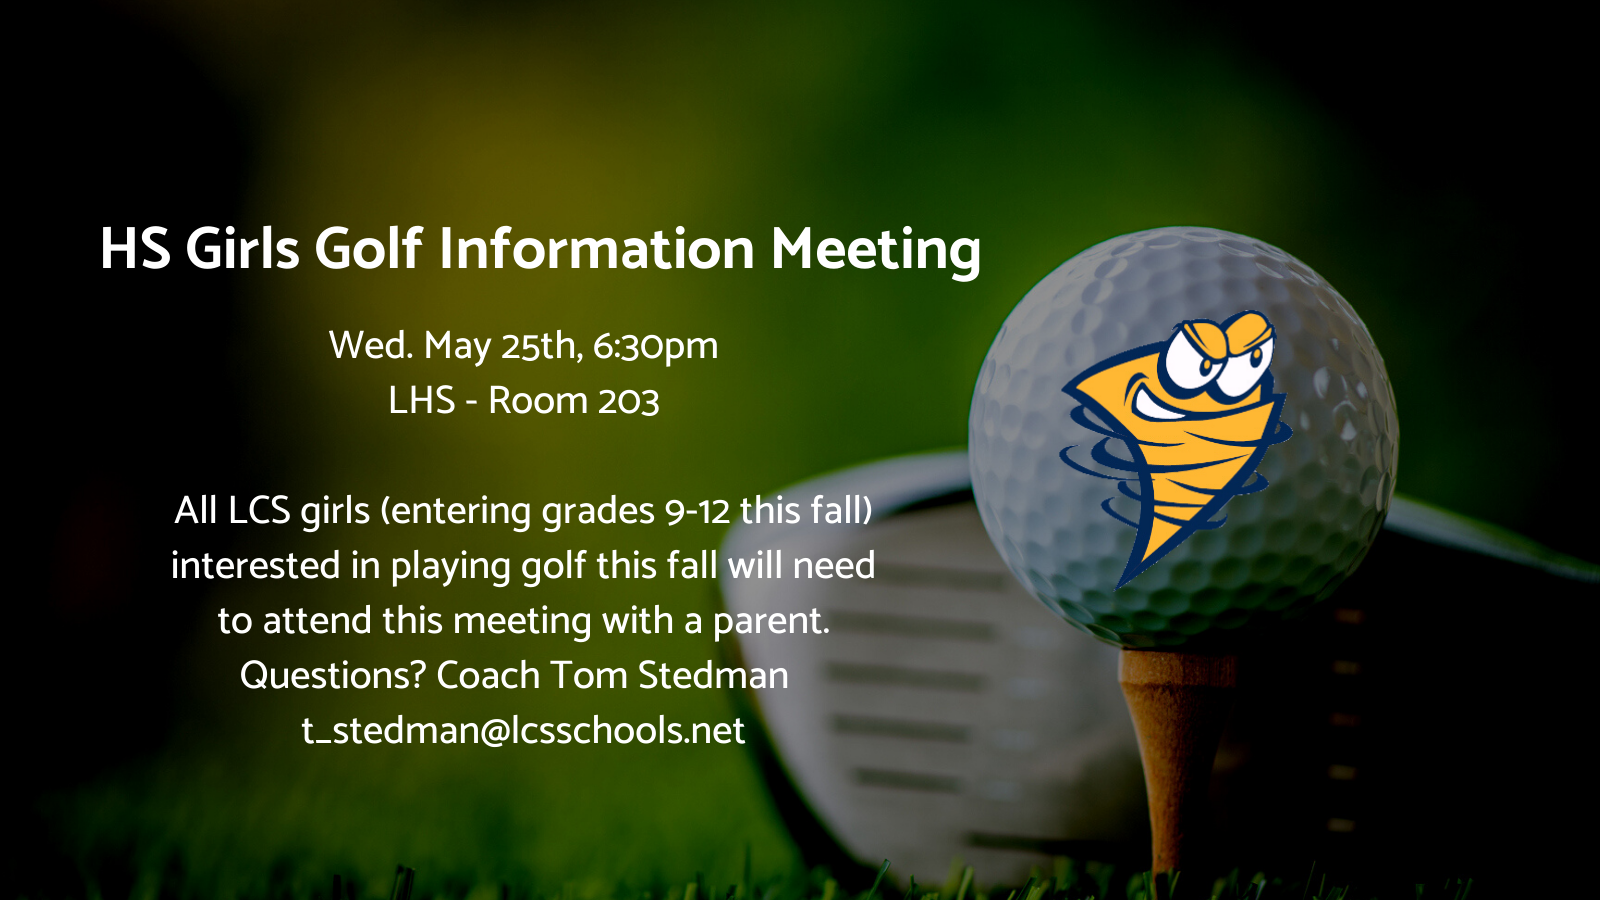 HS Girls Golf Information Meeting ad